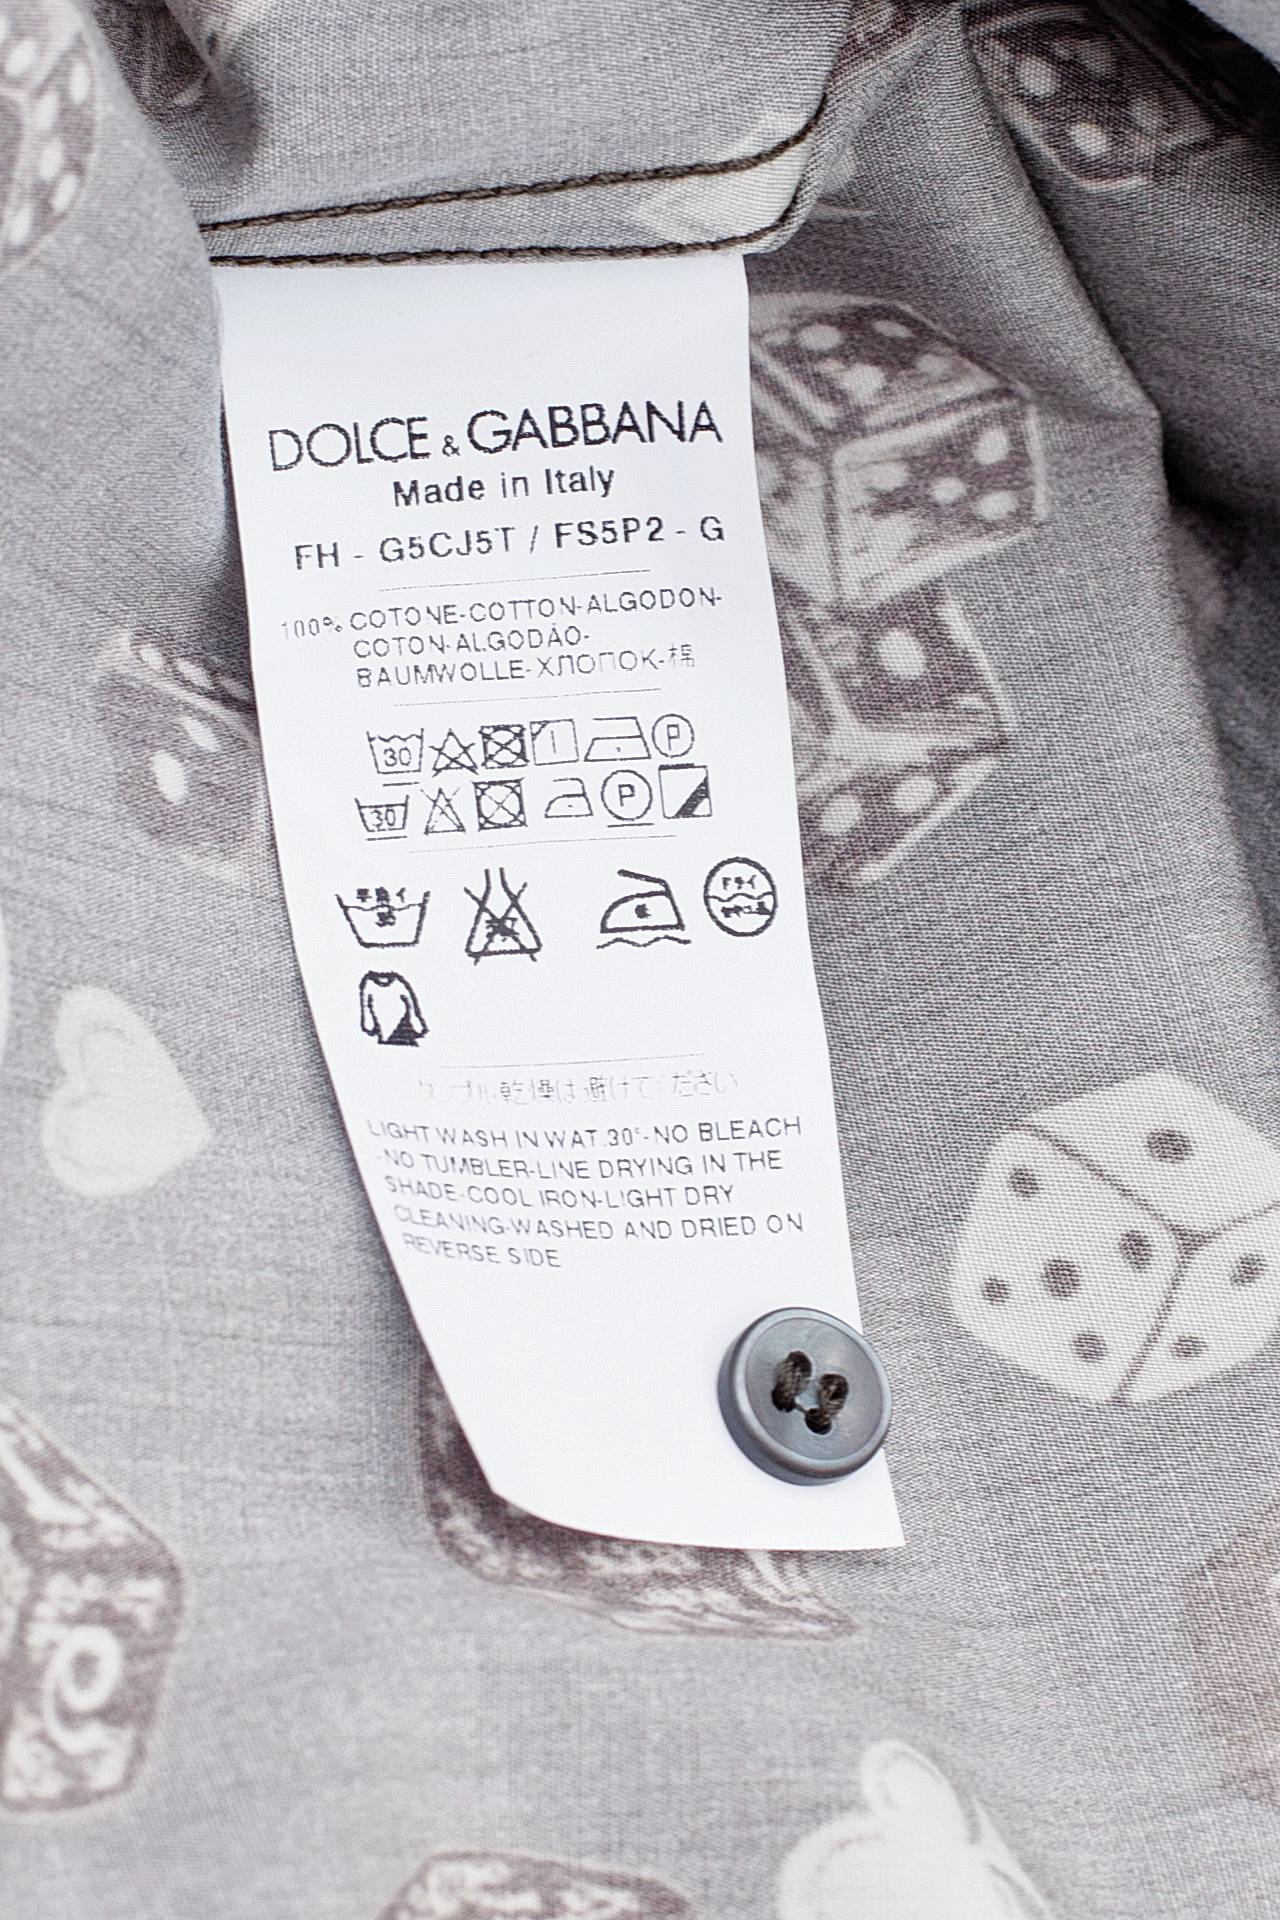 Верхняя бирка. Dolce Gabbana g9ow1t бирки. Dolce Gabbana Basic рубашка мужская бирки. Рубашка Dolce Gabbana мужская бирки. Бирка Дольче Габбана.